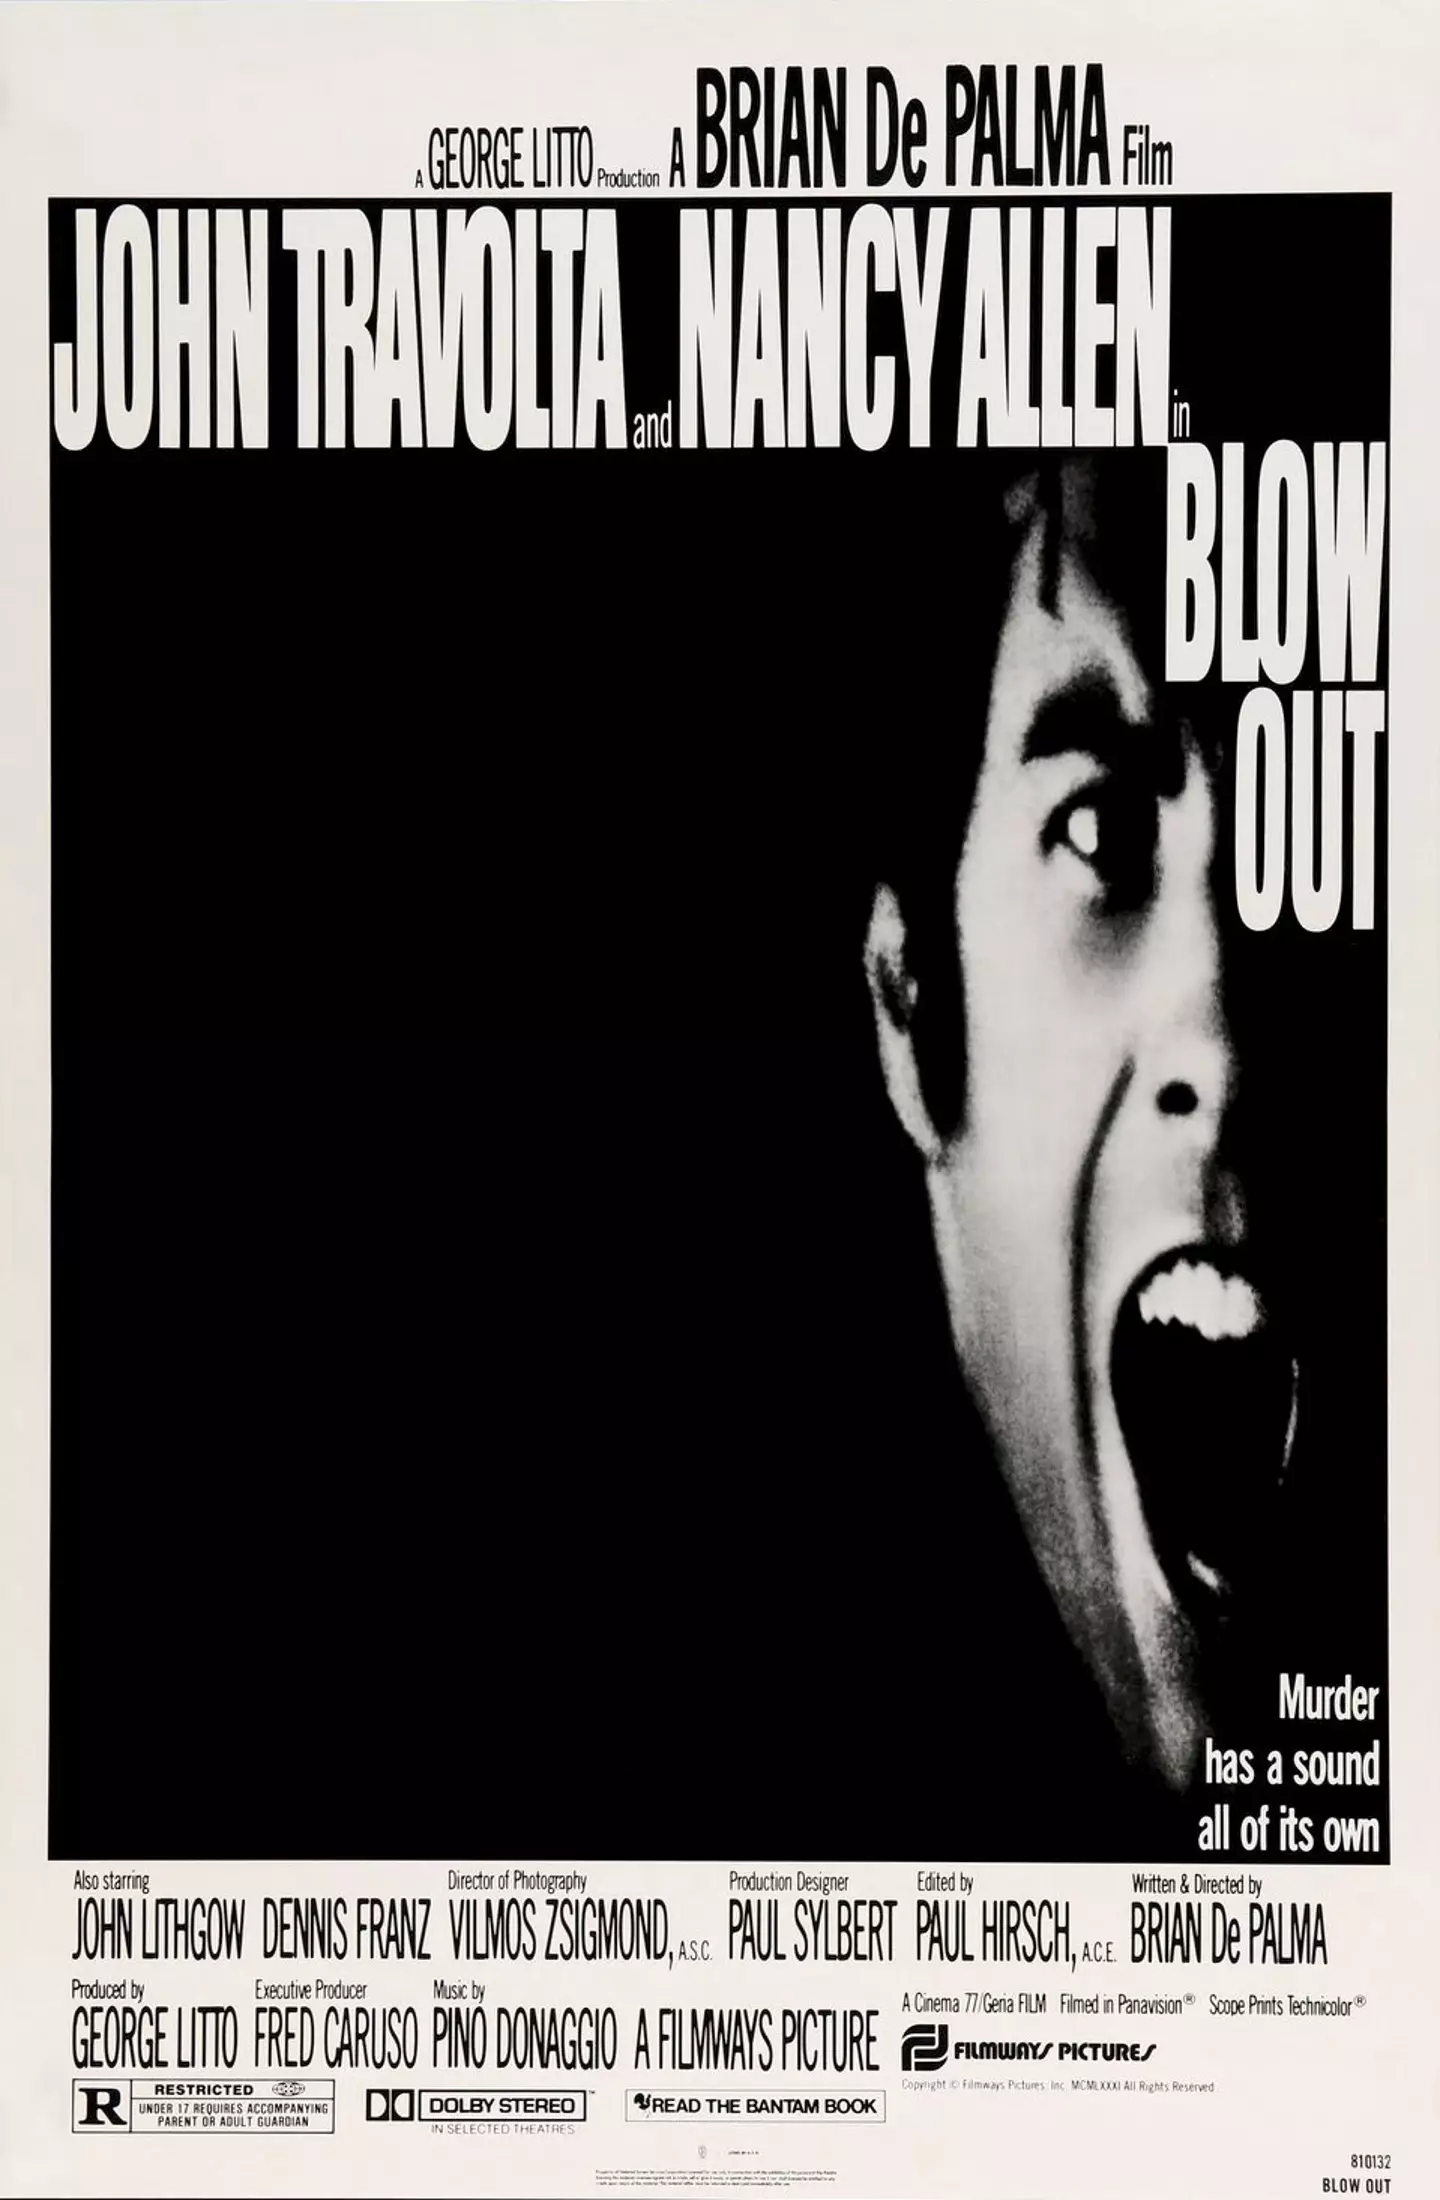 1981's Blow out features future Pulp Fiction star, John Travolta.